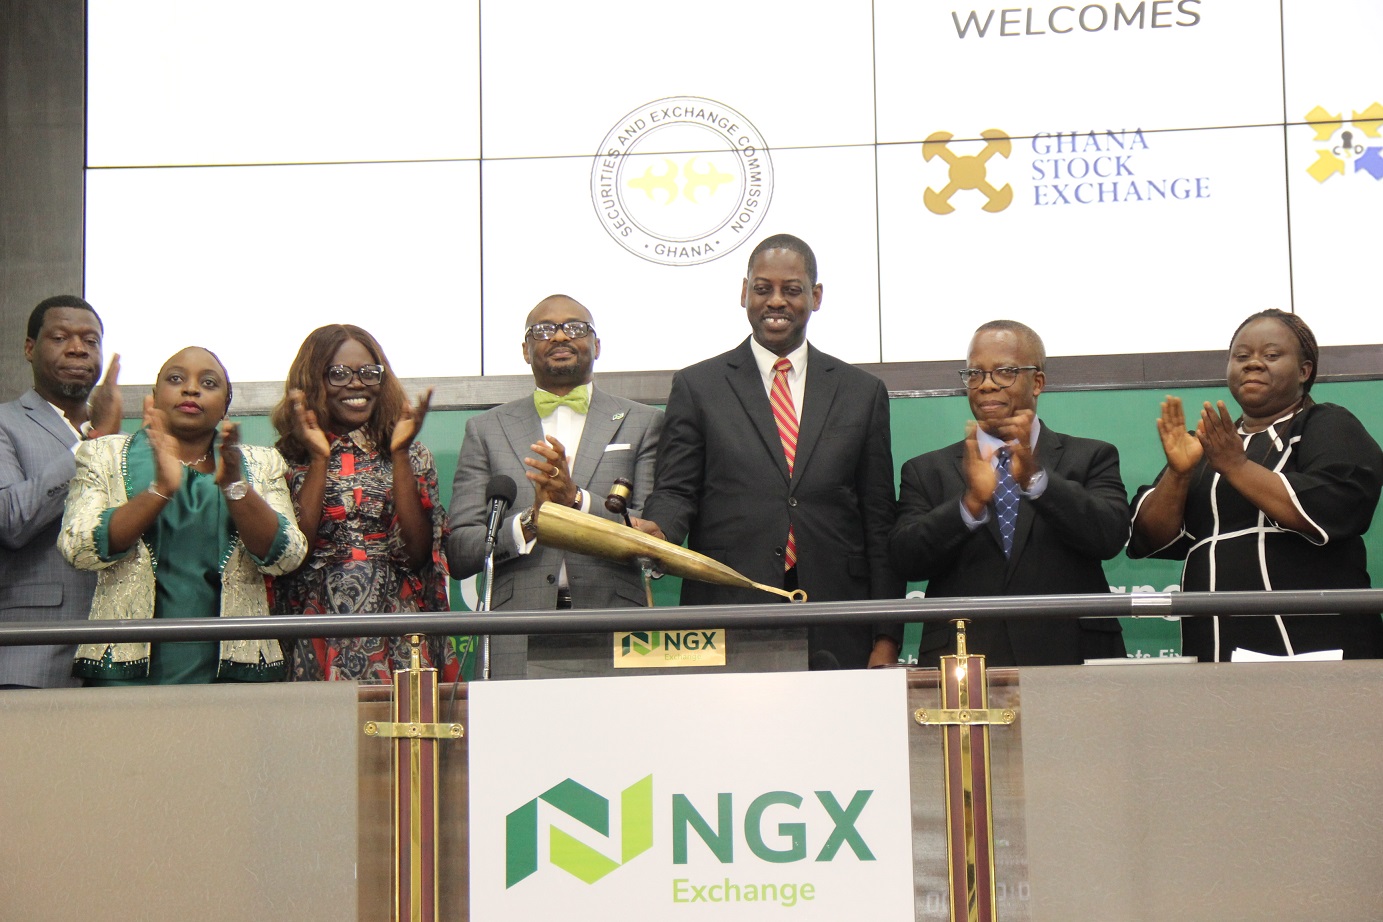 NGX stimulate economic development